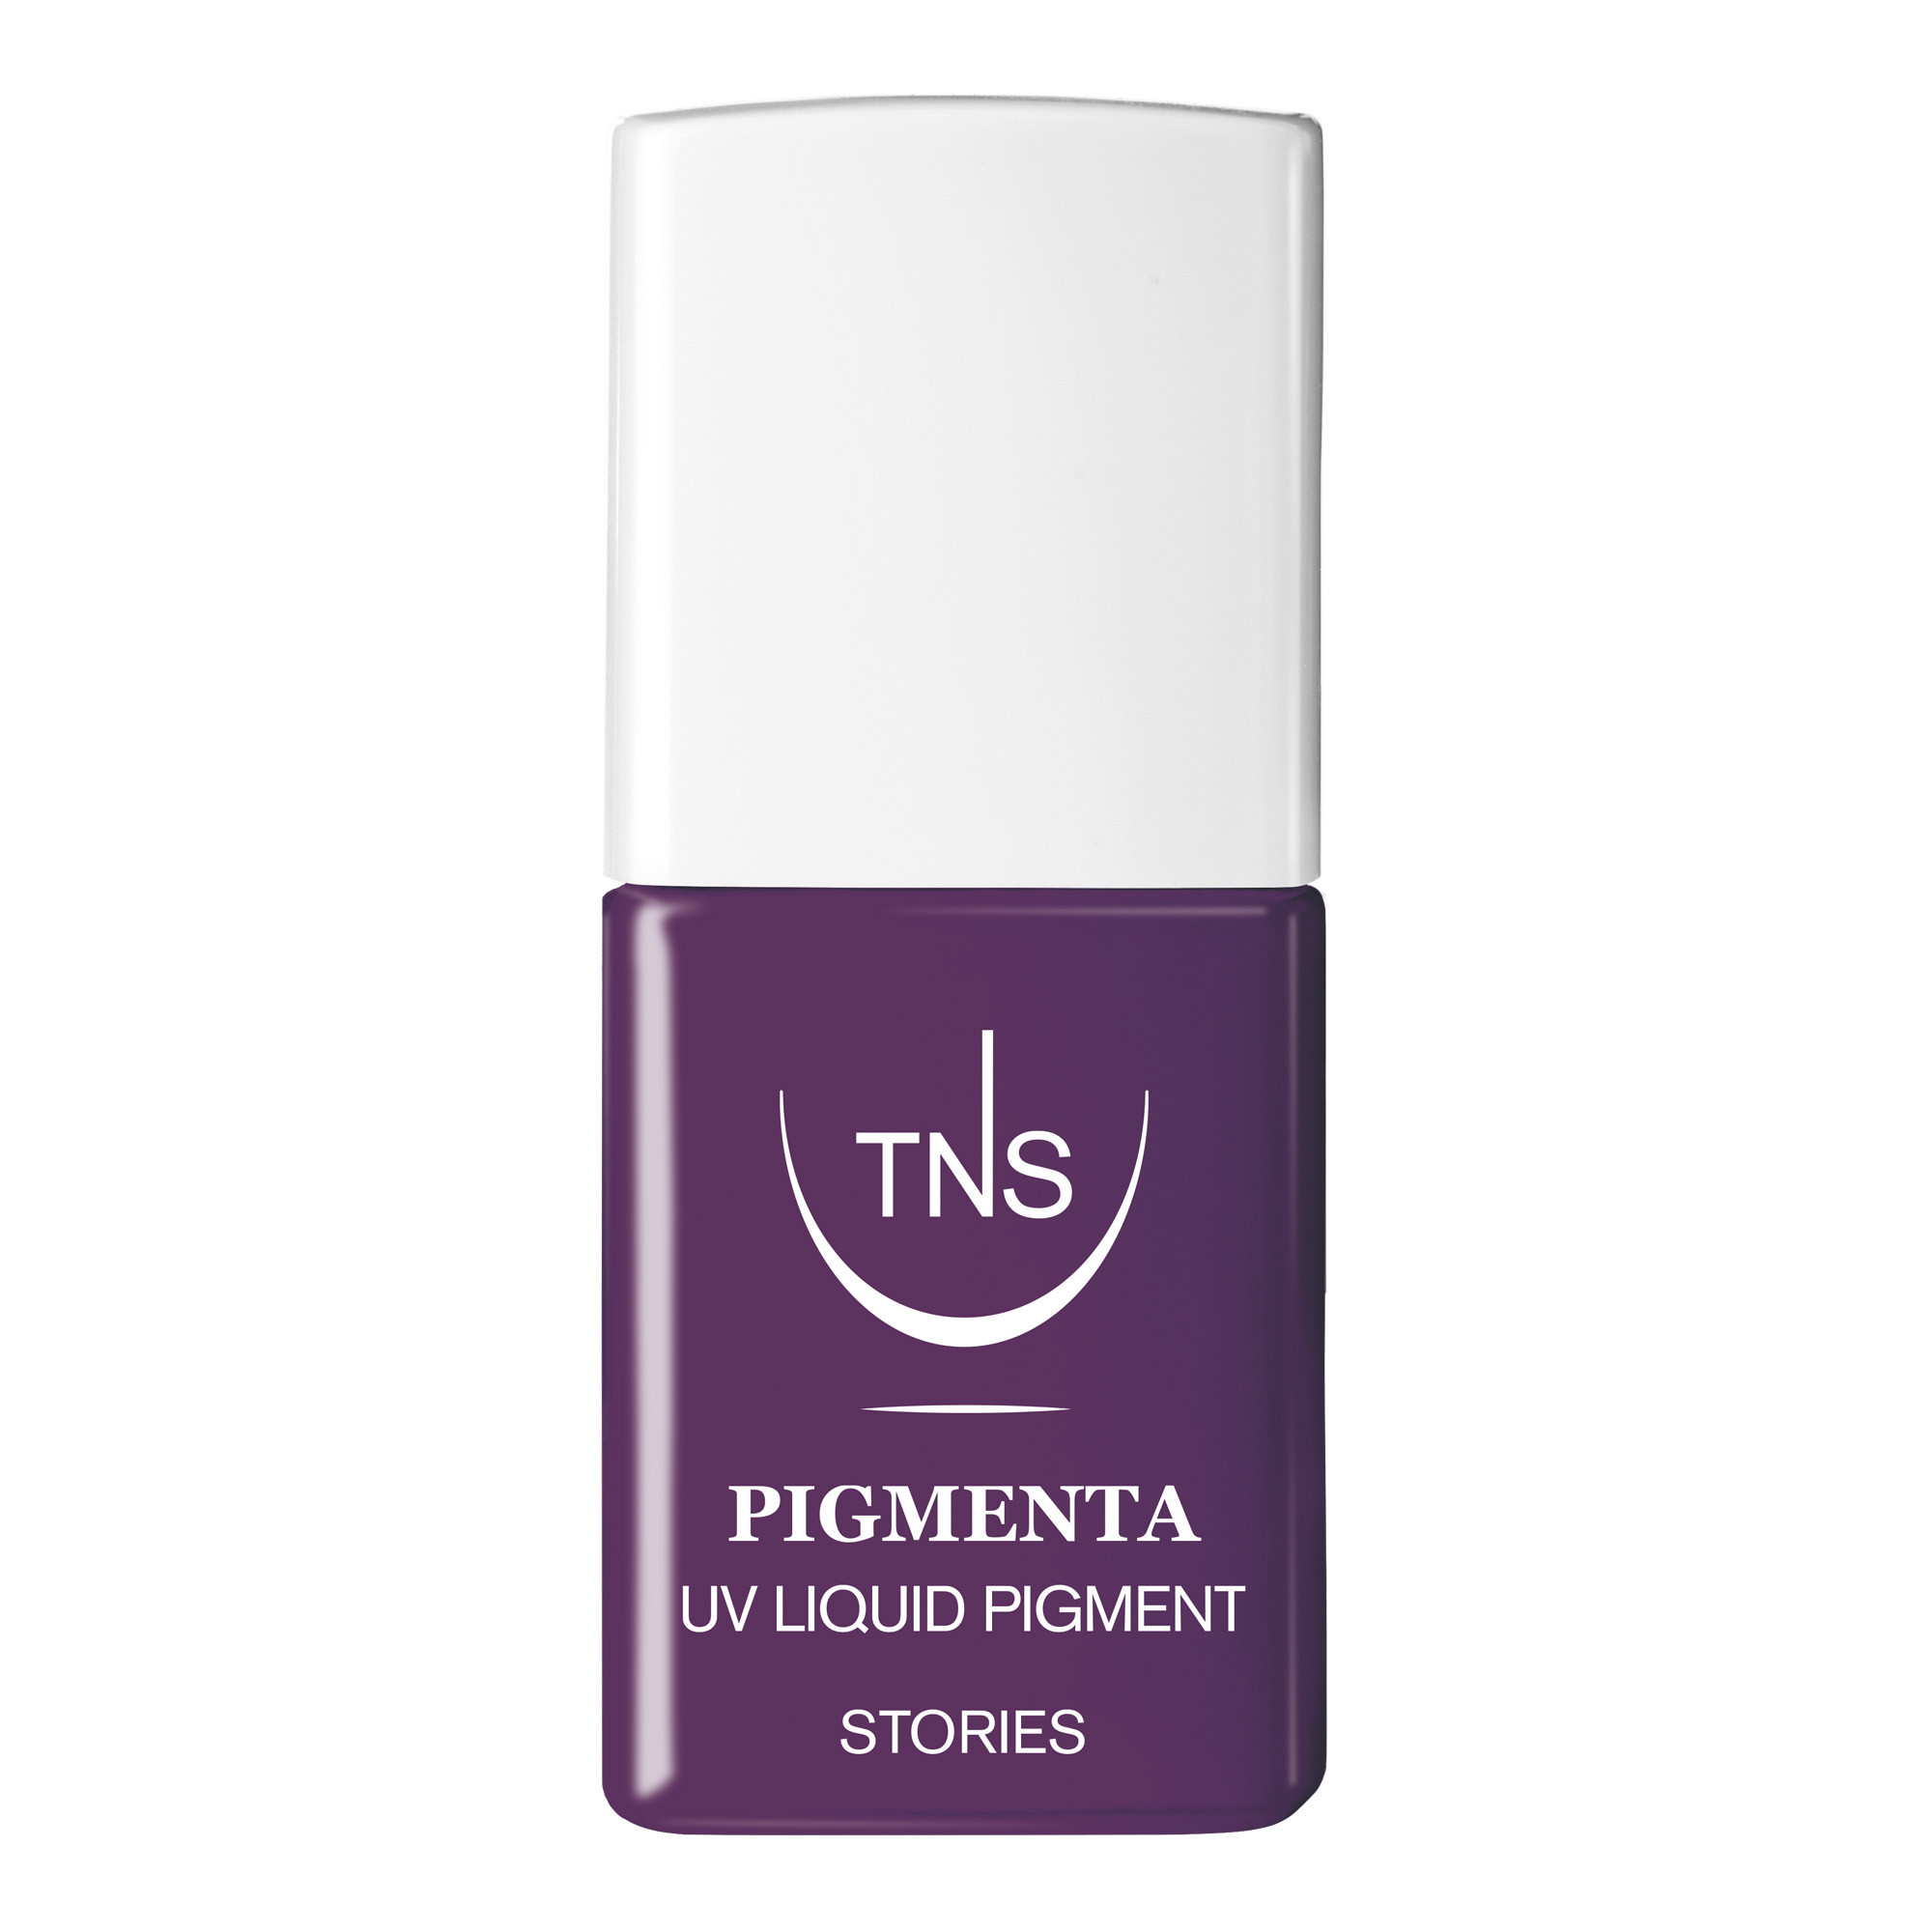 UV Flüssigpigment Stories violett 10 ml Pigmenta TNS